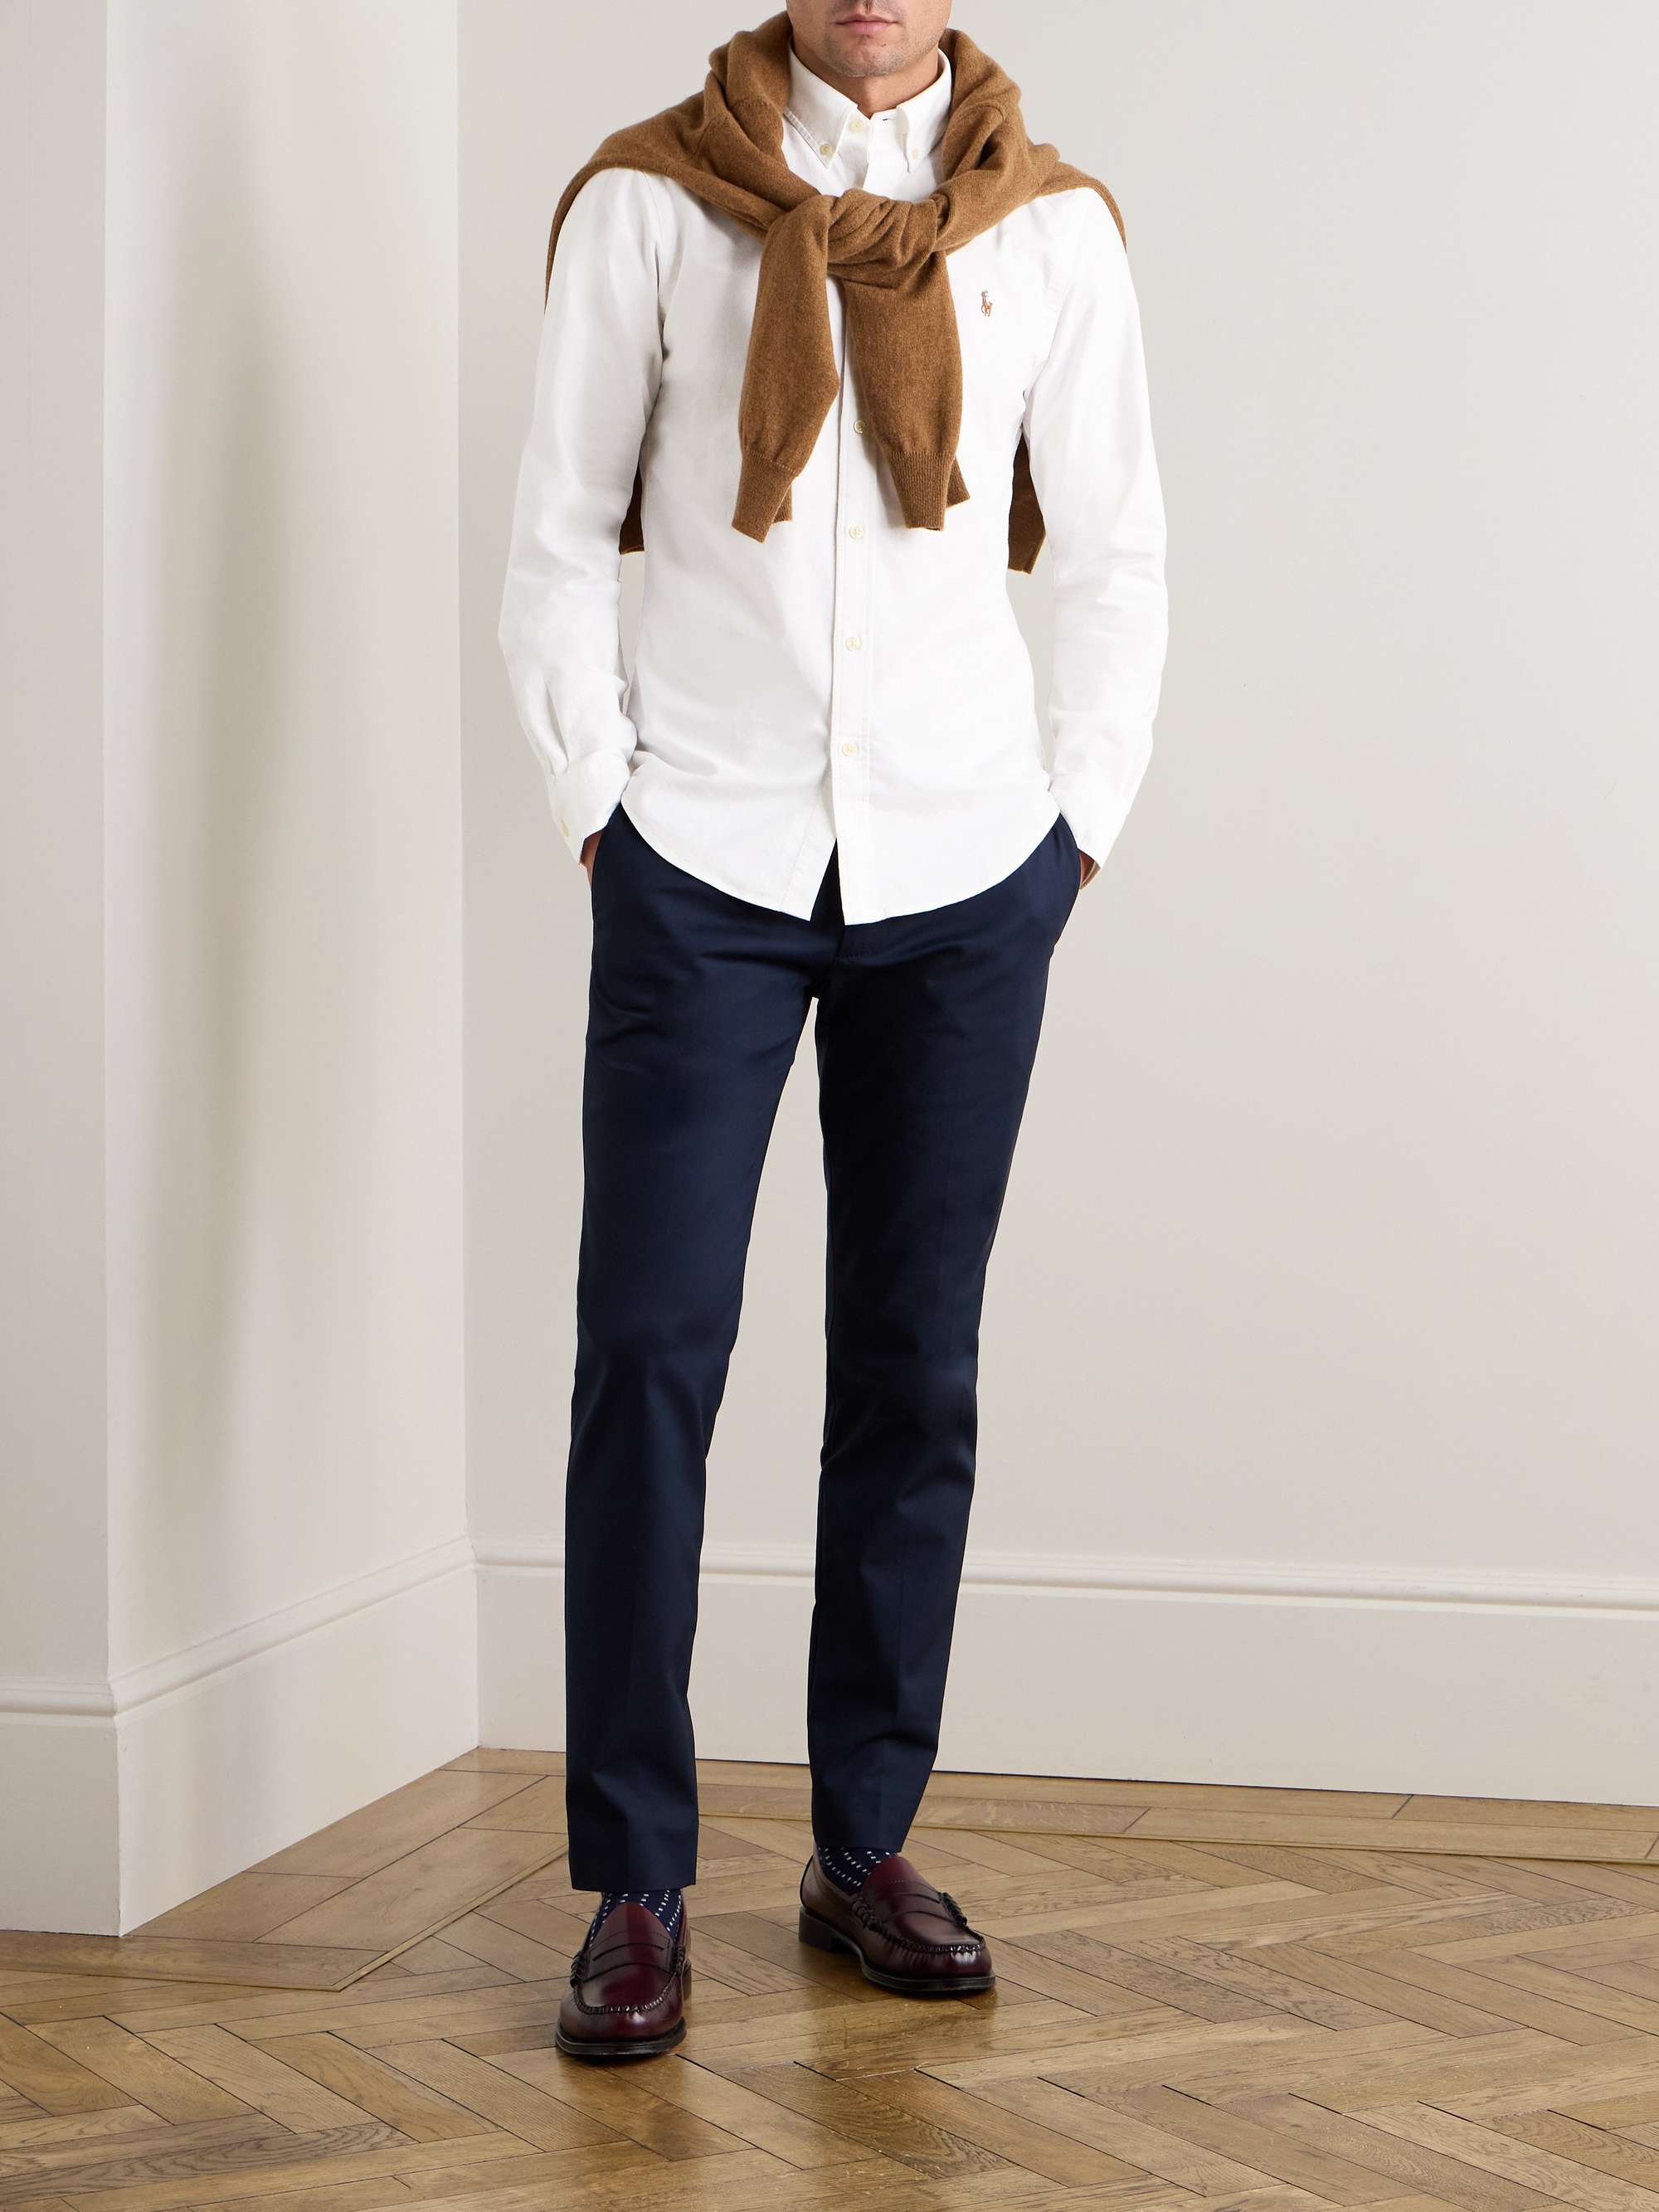 White Slim-Fit Cotton Oxford Shirt | POLO RALPH LAUREN | MR PORTER